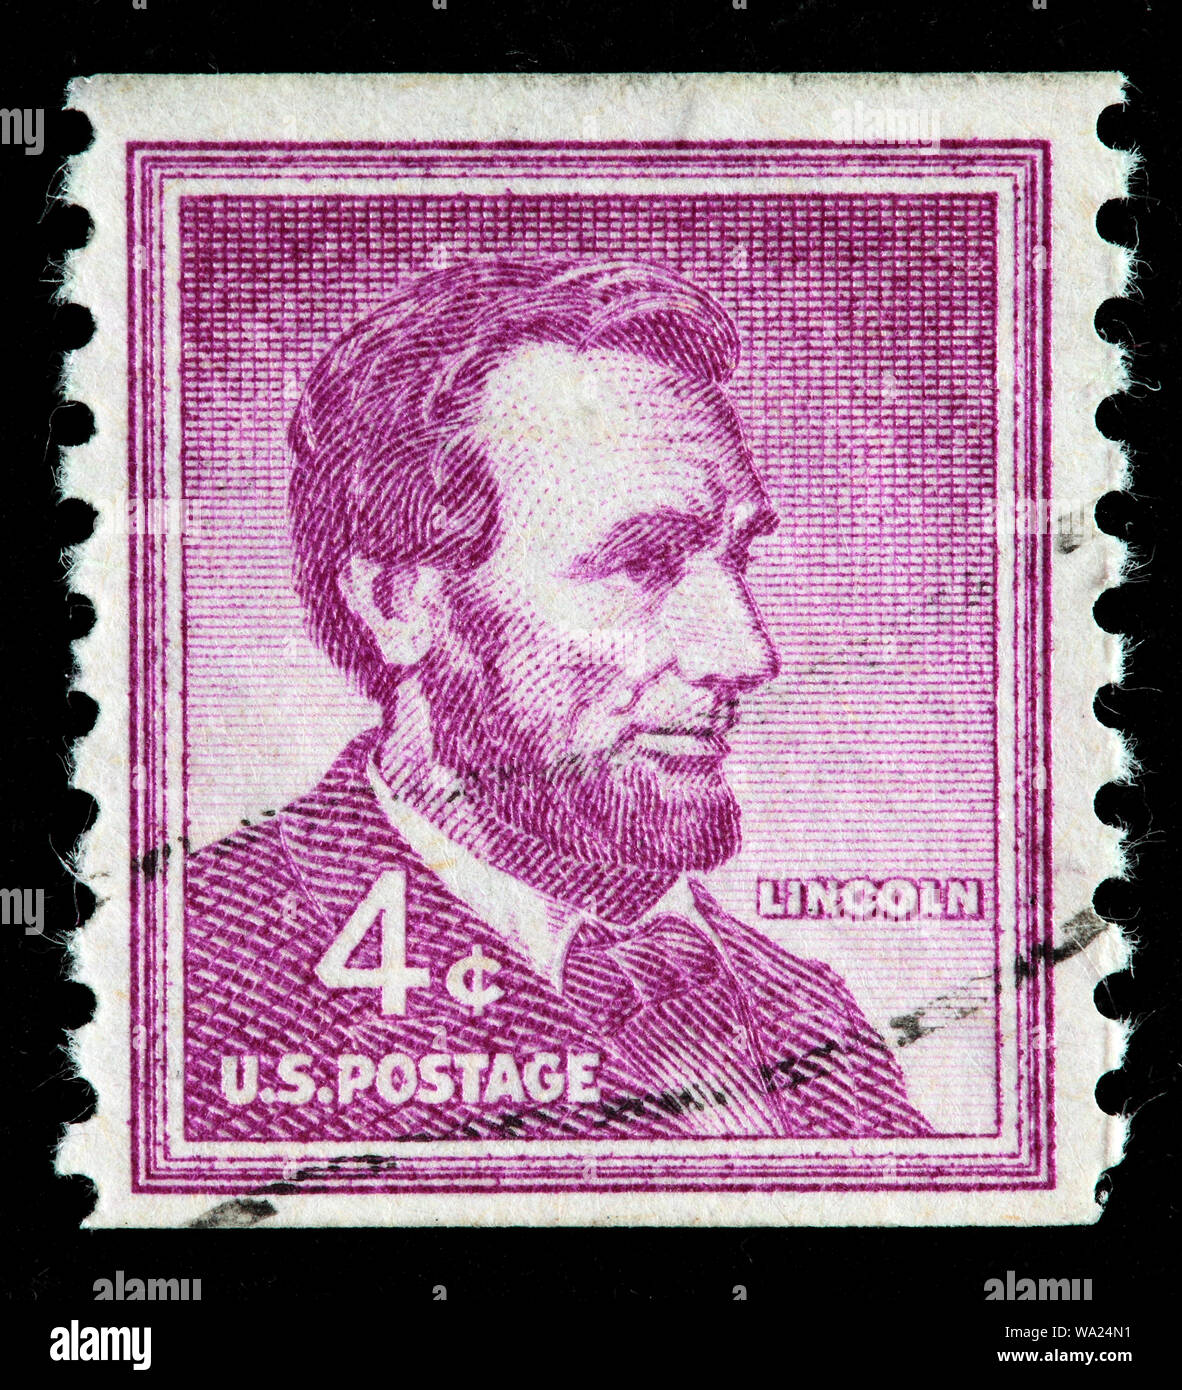 Abraham Lincoln (1809-1865), President of USA, postage stamp, USA, 1954 Stock Photo